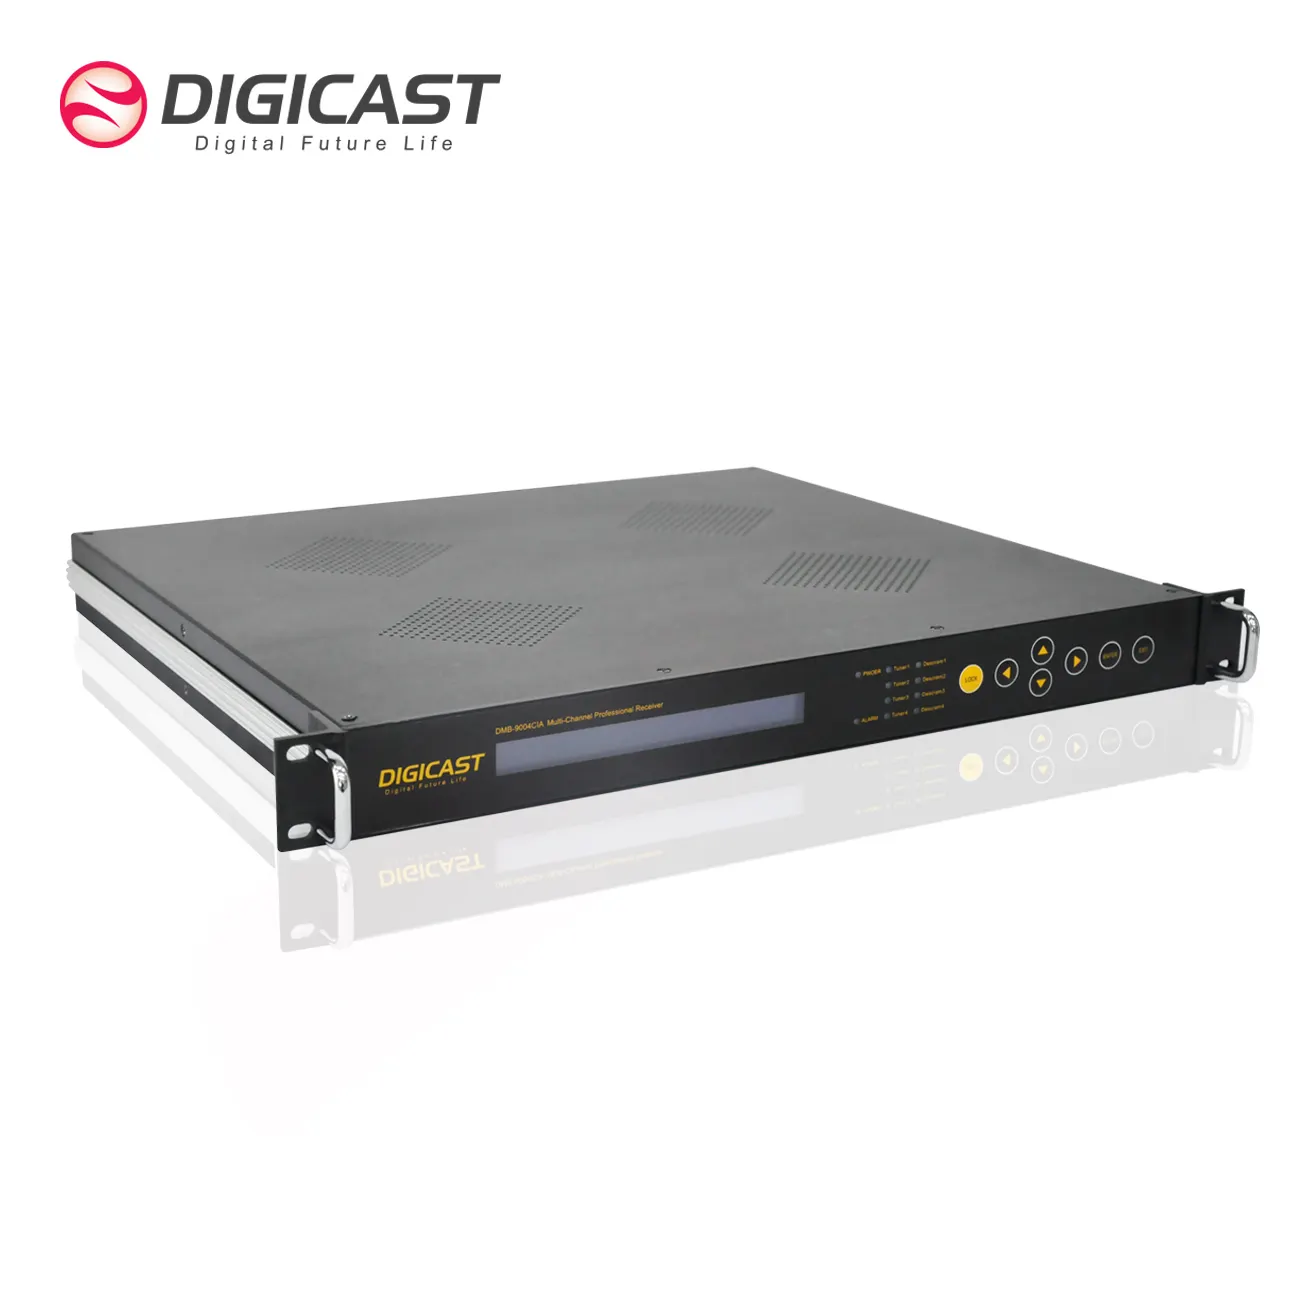 (DMB-9004CIA) ใหม่ Revolution 4 ช่อง DVB-S2X 48 * SPTS หรือ 4 MPTS ผ่าน IP Professional สำหรับการเข้ารหัสช่อง